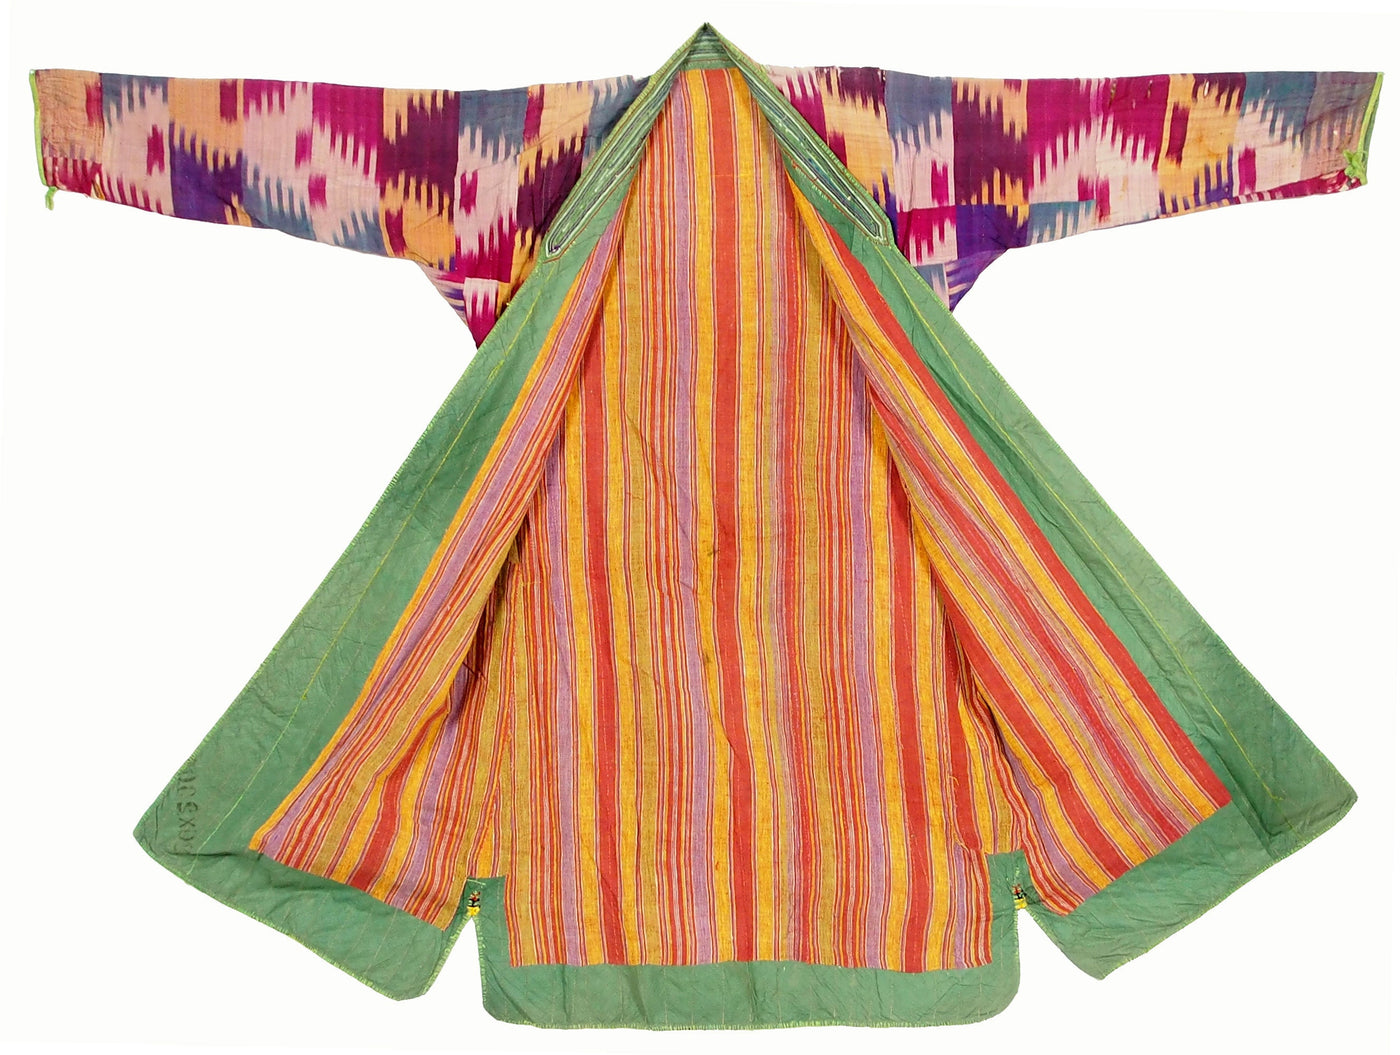 antik Orient Uzbekische Nomaden frauen  Ikat Chirpy Mantel khalat afghan uzbek kleid afghanistan  kostüm Chapan  Nr-18-37  Orientsbazar   